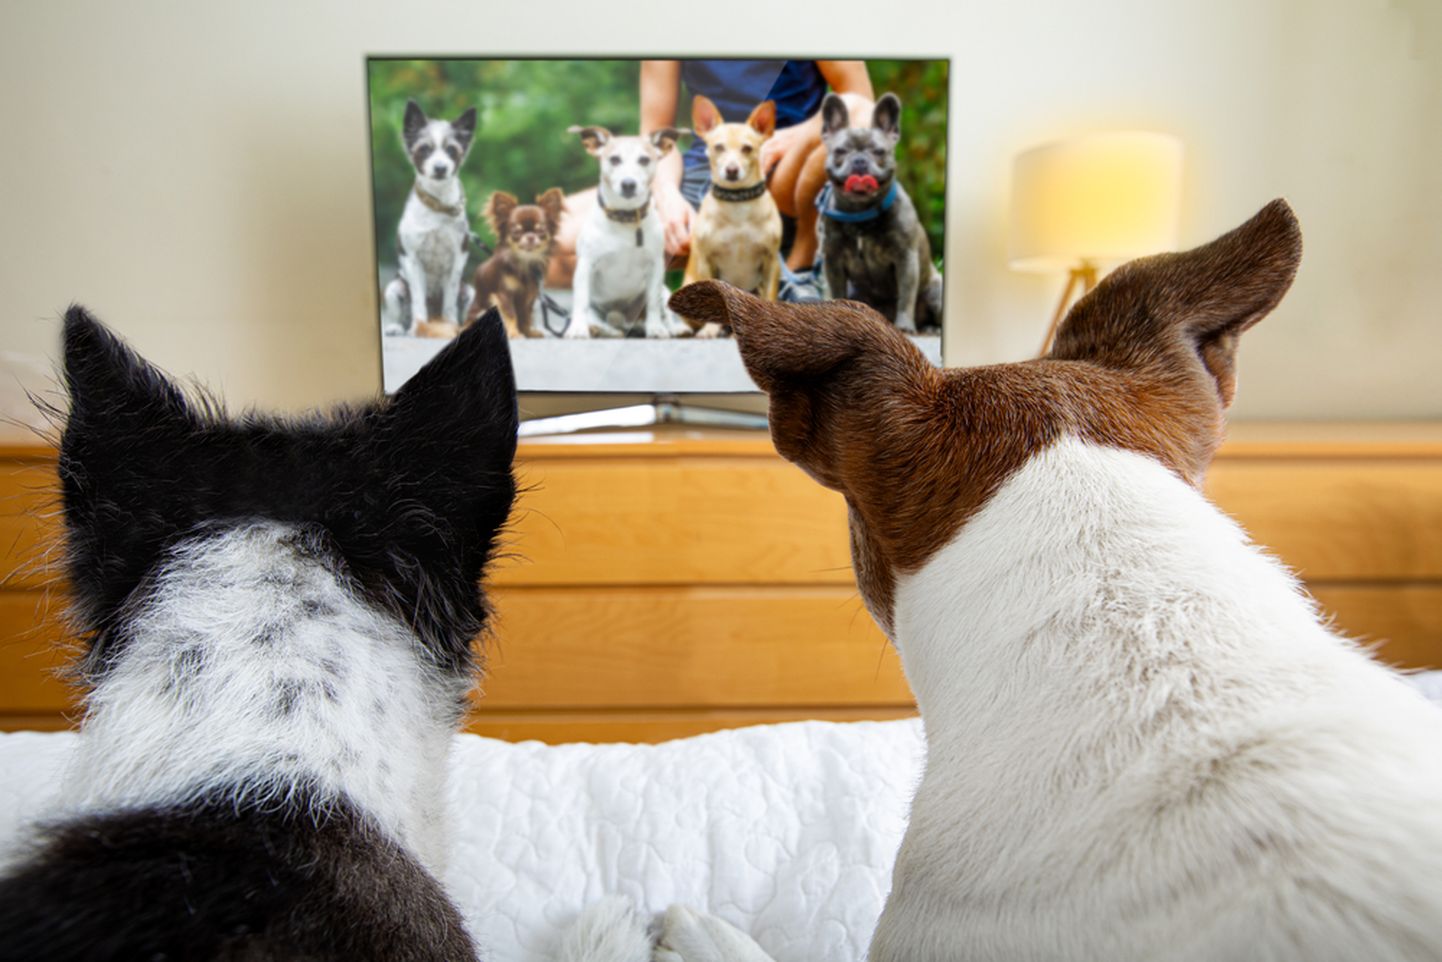 Какую телепрограмму предпочитает ваша собака?